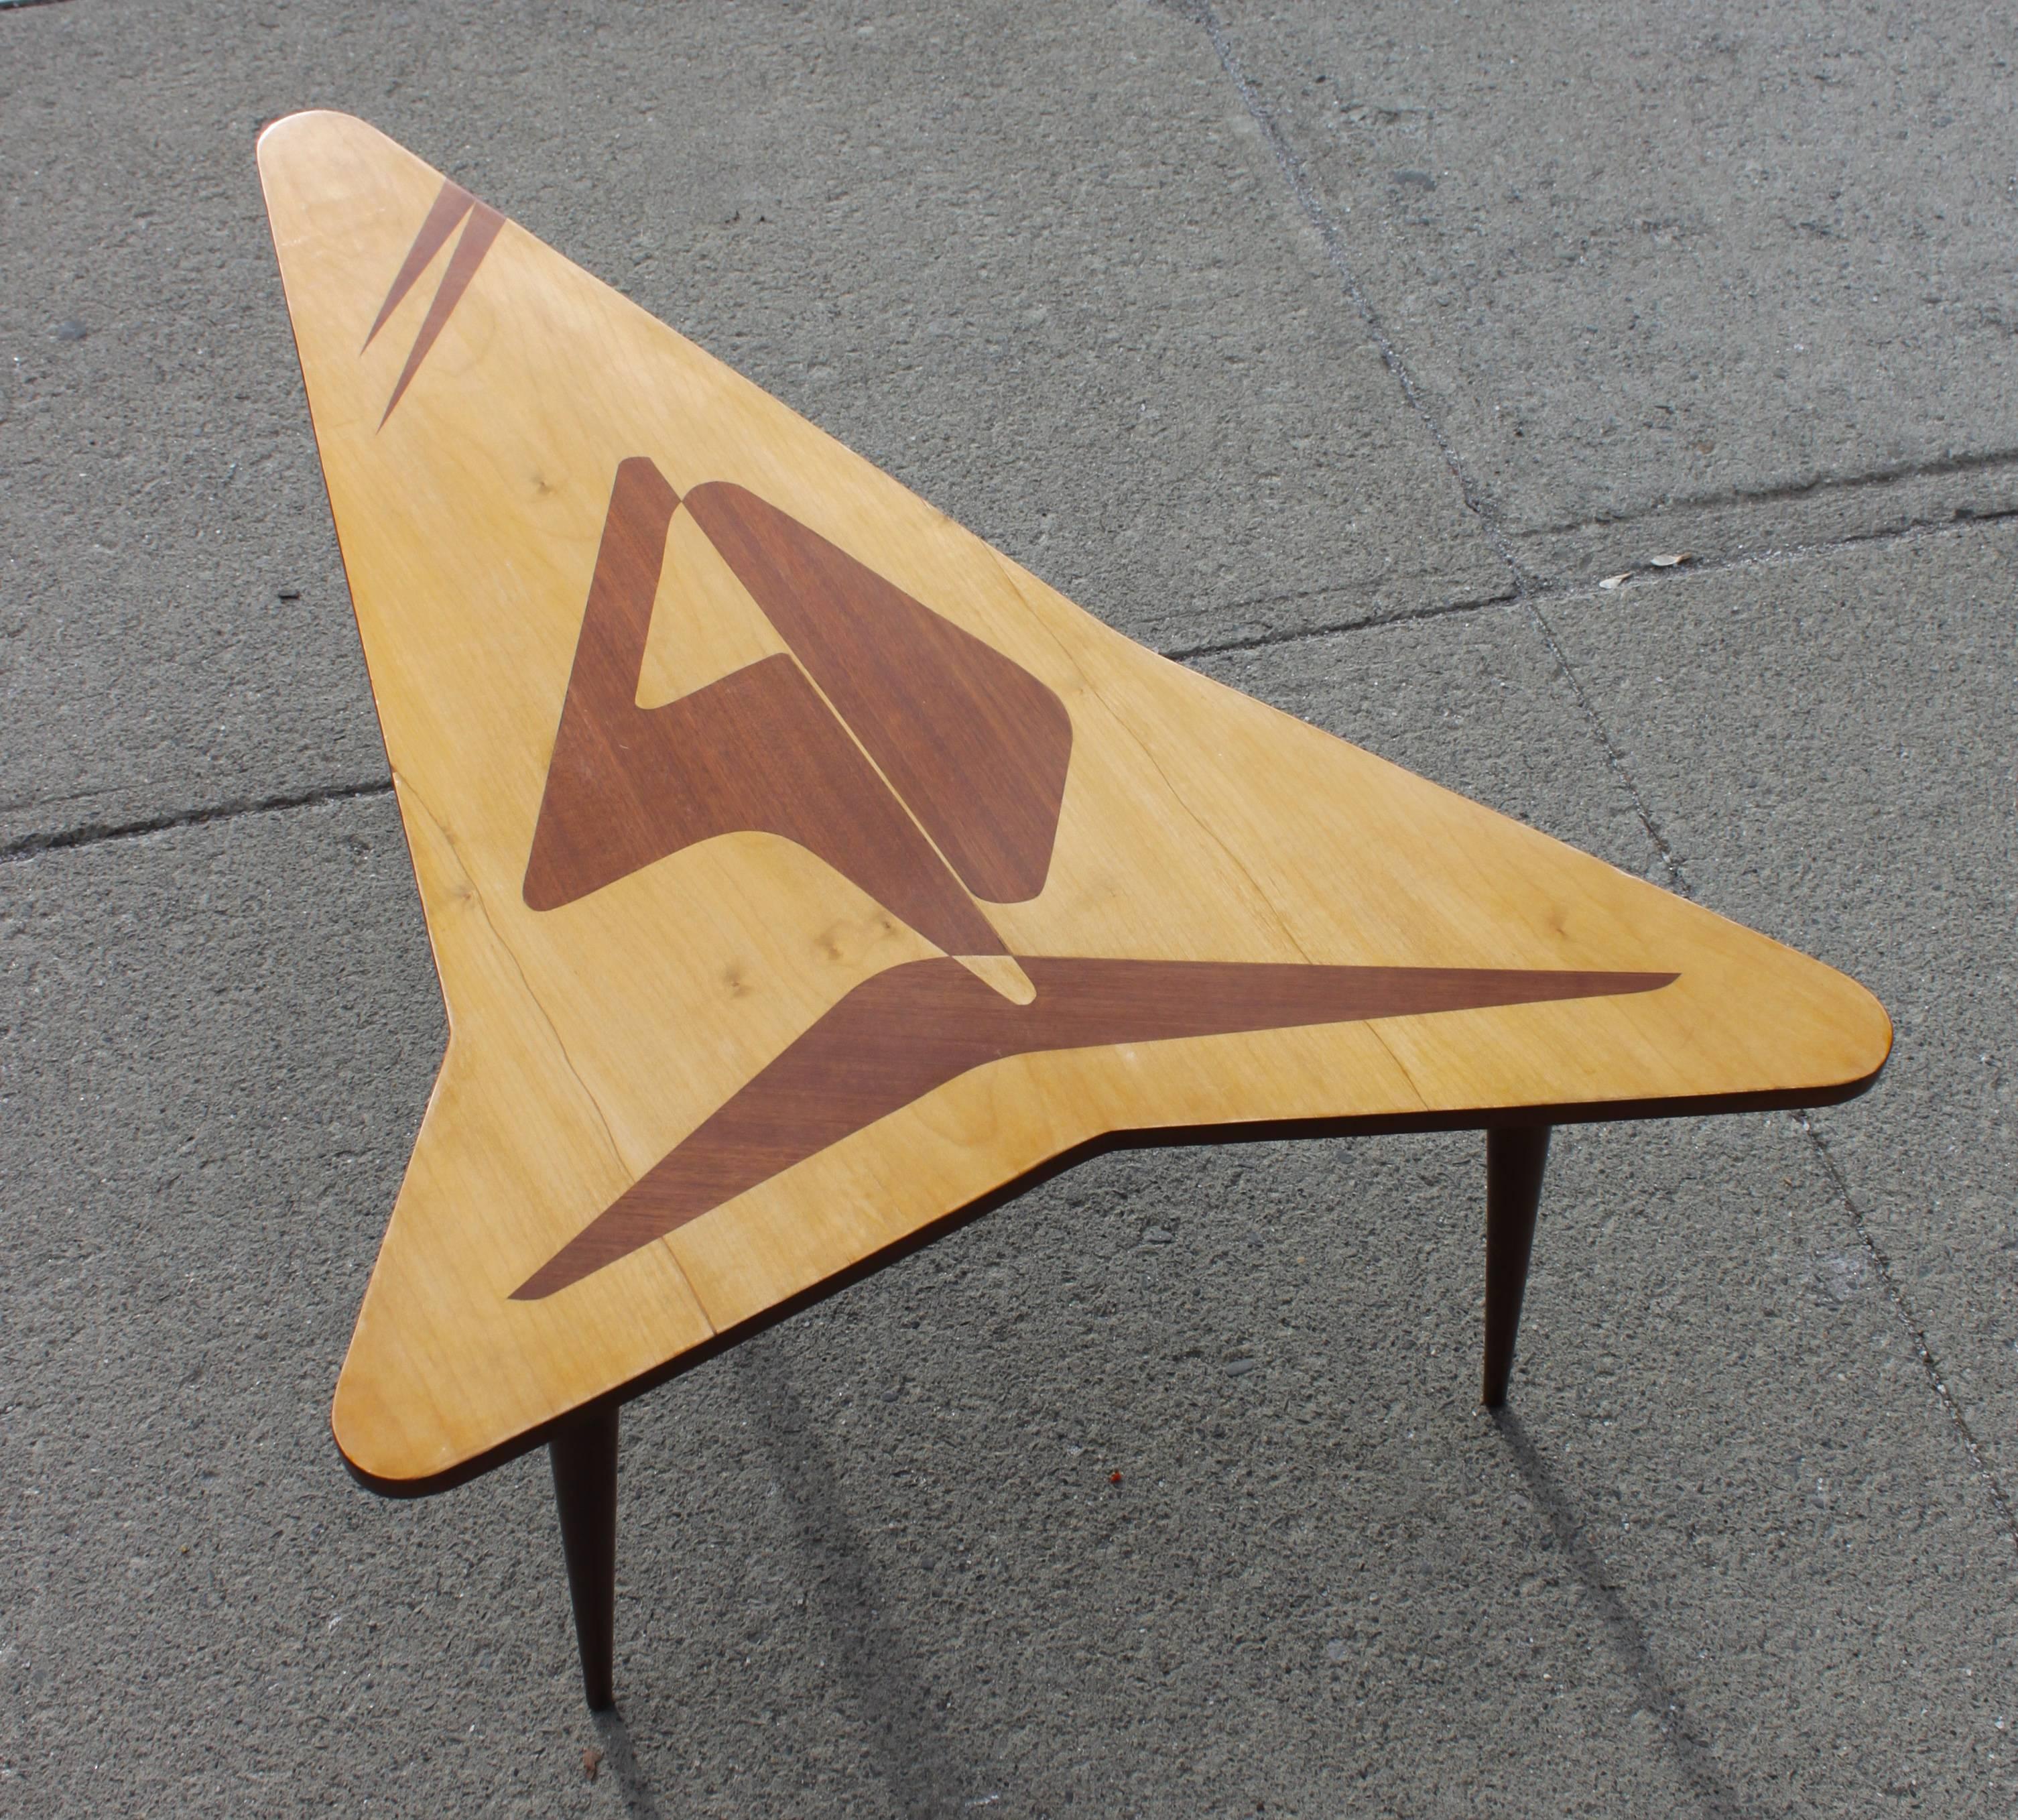 1960s vintage Italian Boomerang coffee table. Inlaid wood top. Great Mid-Century Modern design.